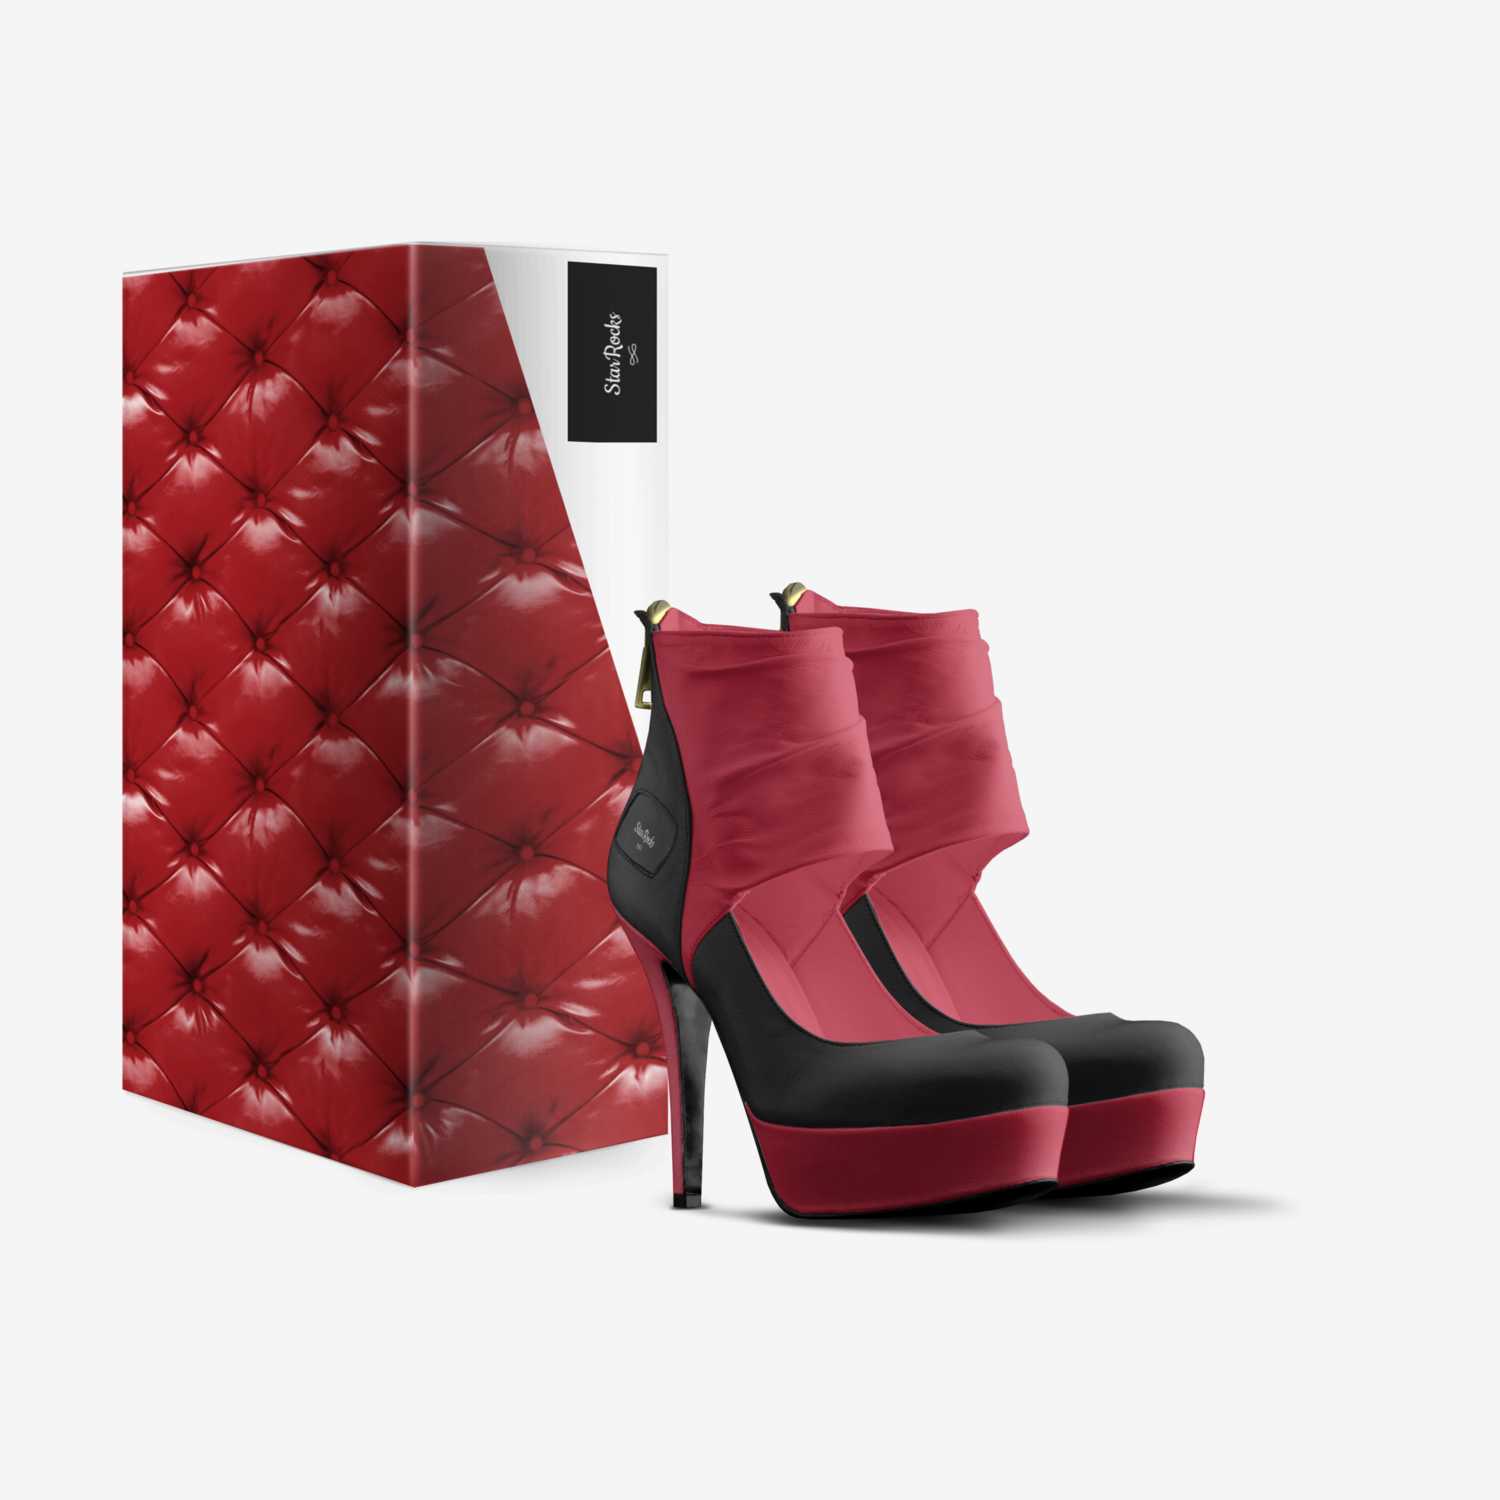 StarRocks custom made in Italy shoes by Lamario Star | Box view